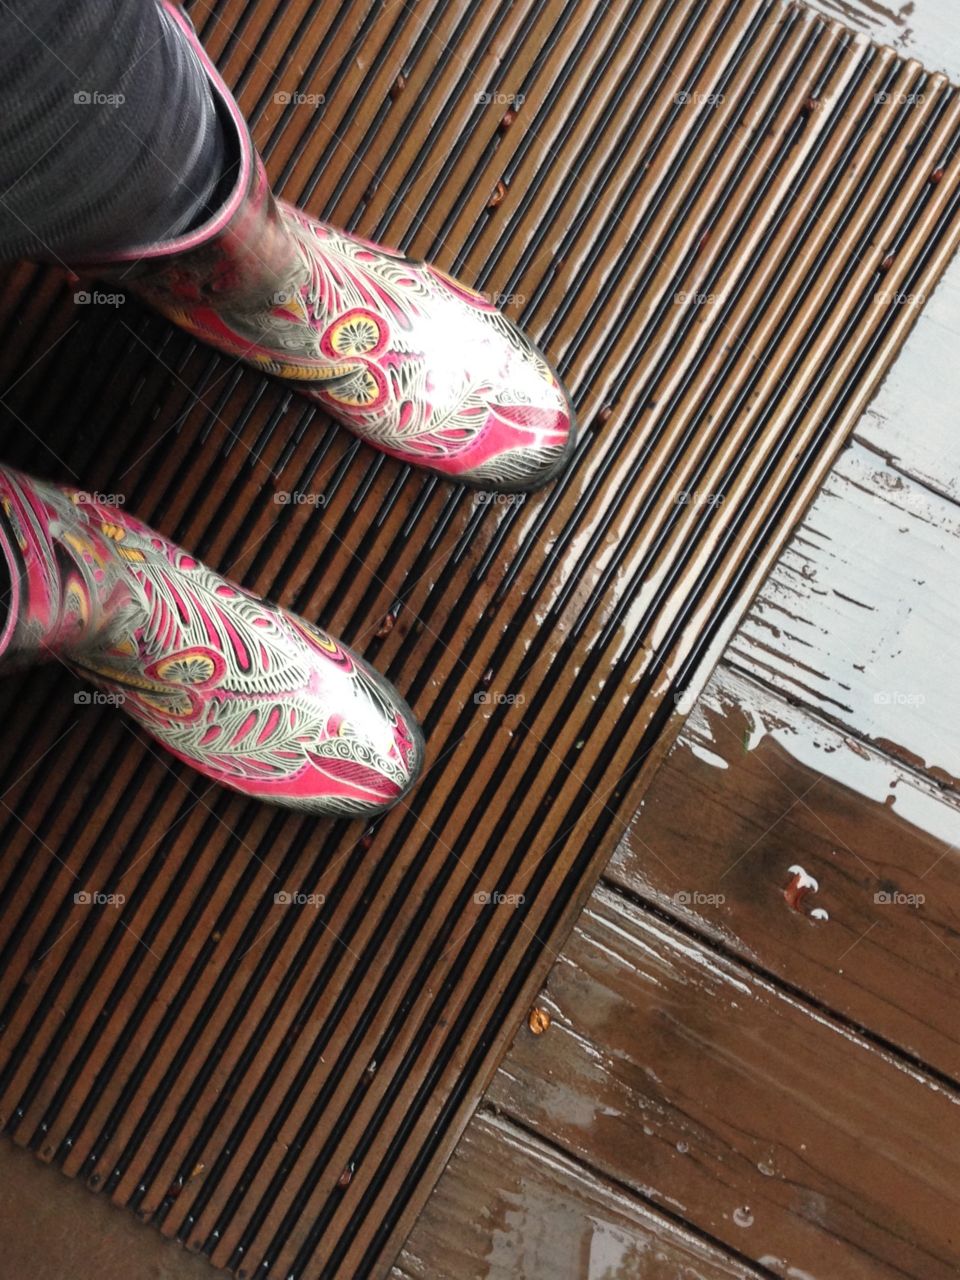 Rainy day footwear